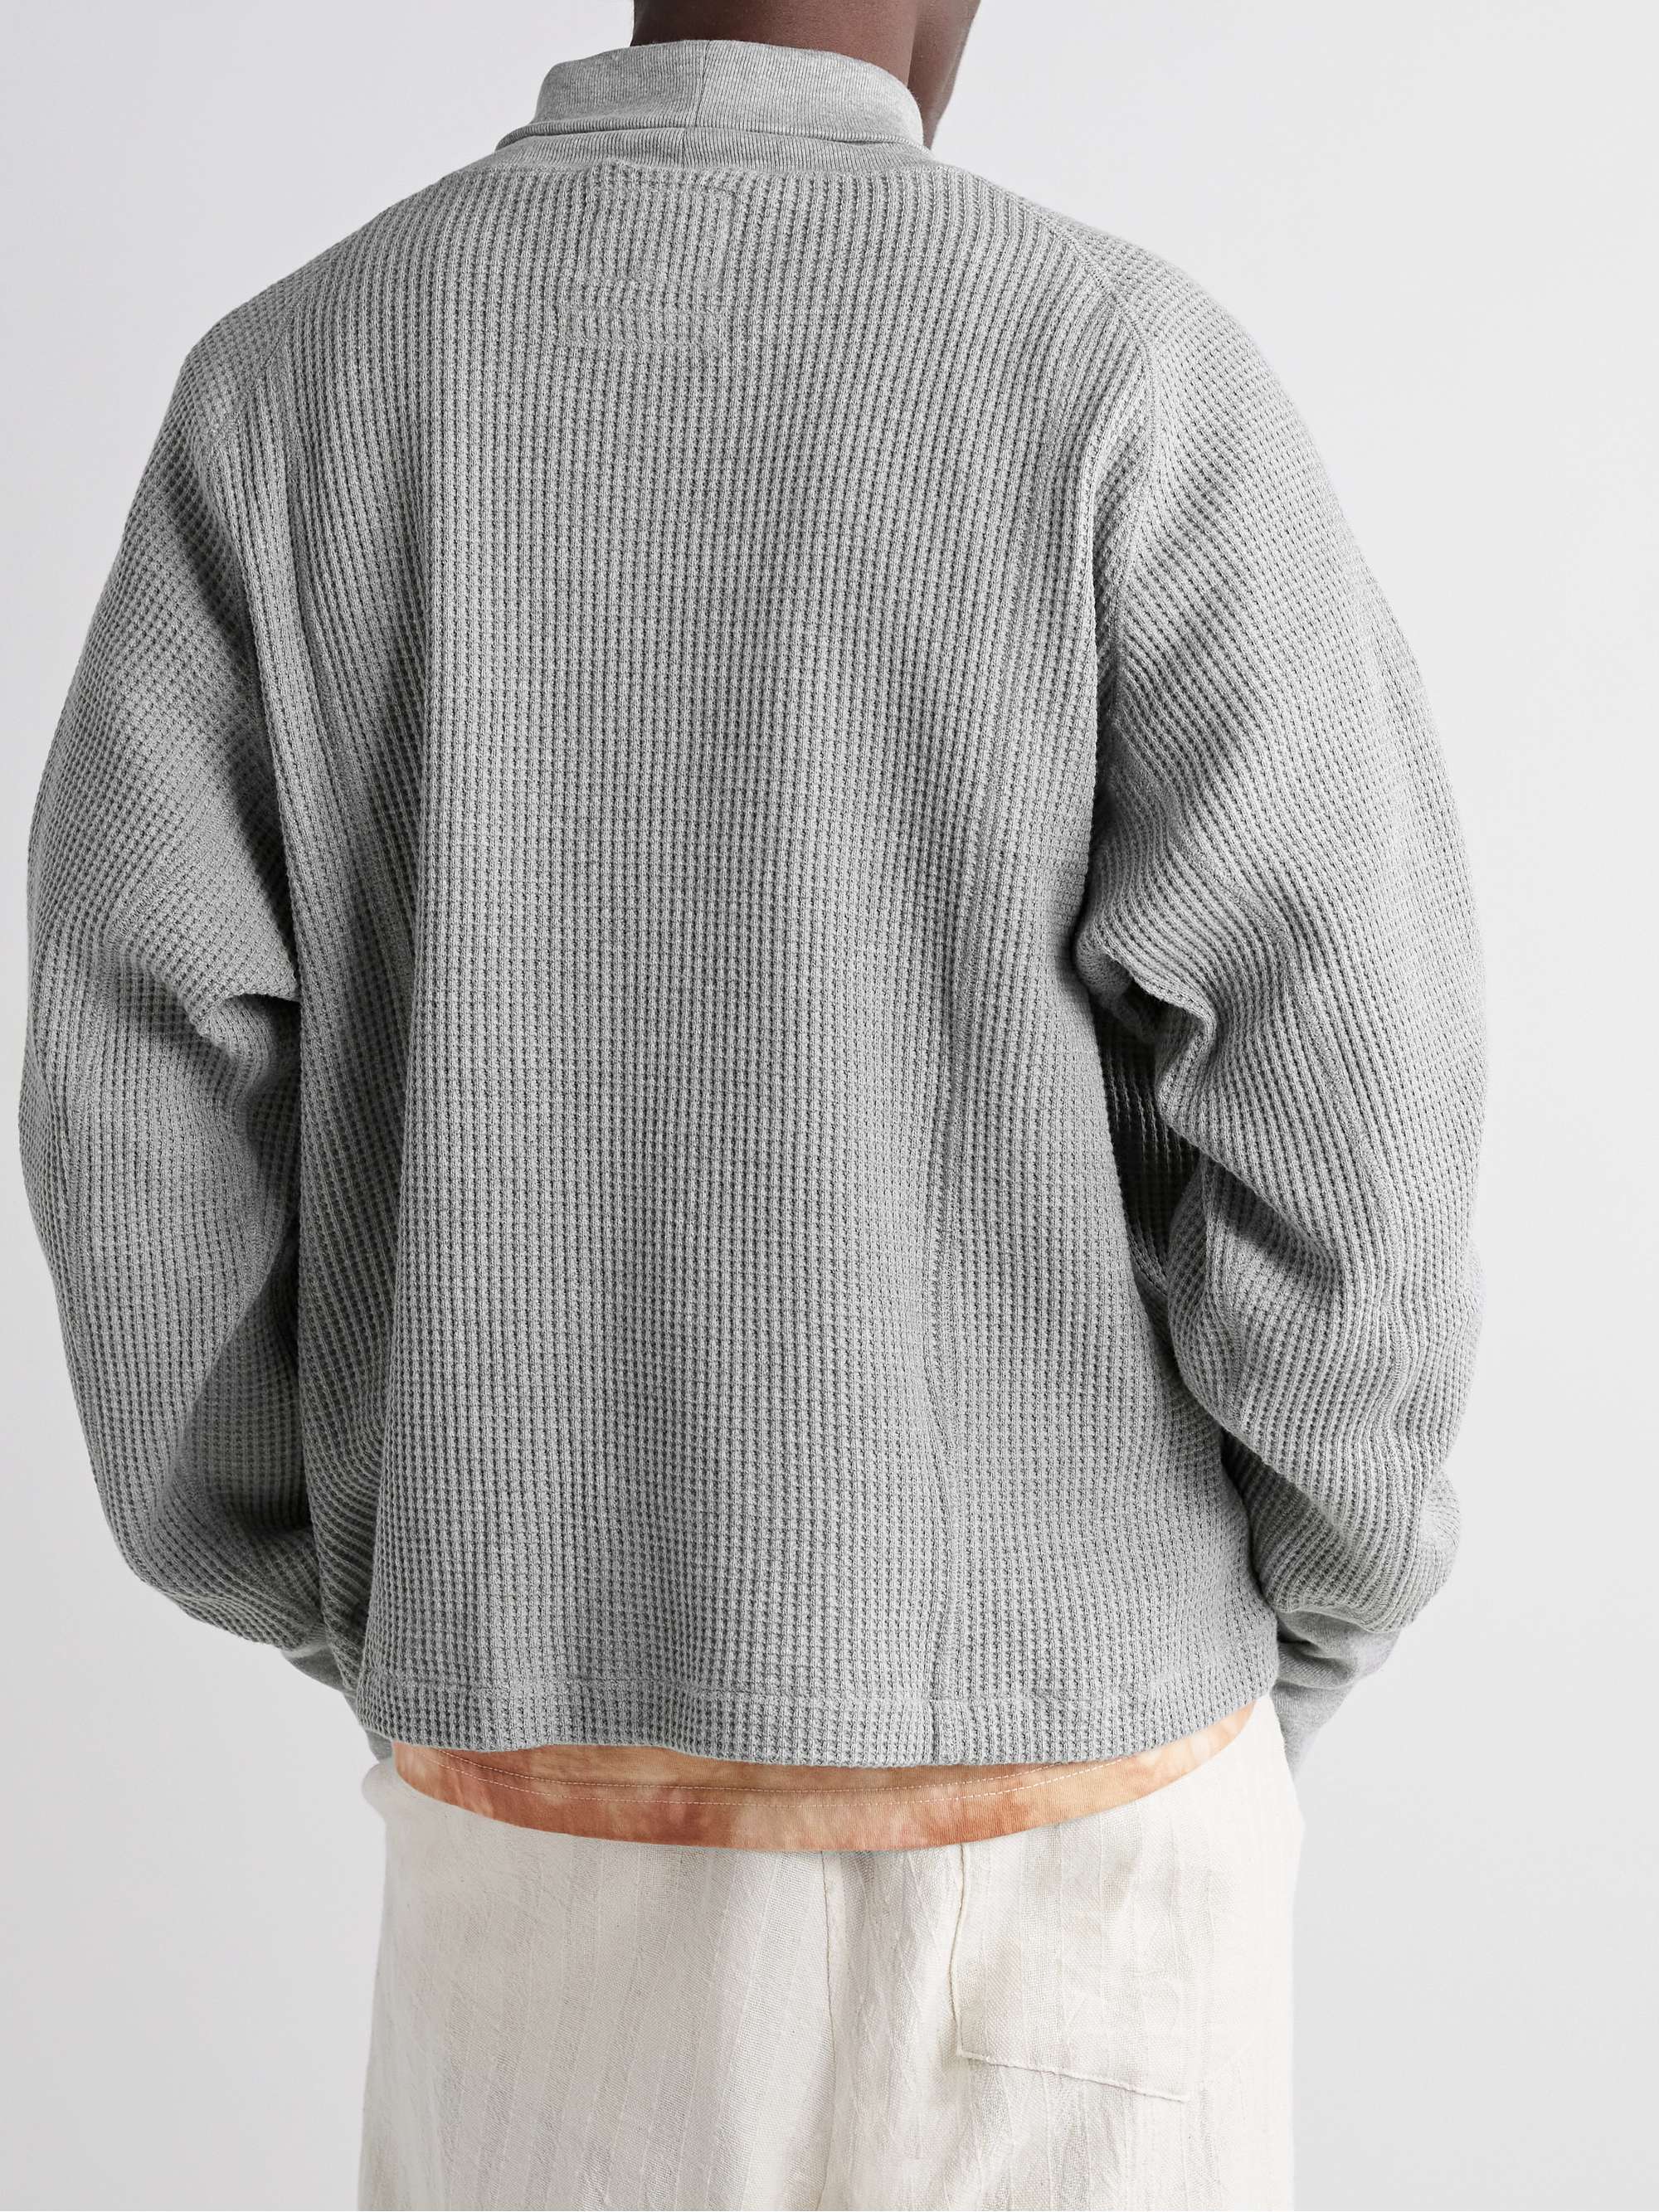 NICHOLAS DALEY Waffle-Knit Cotton Rollneck Sweater